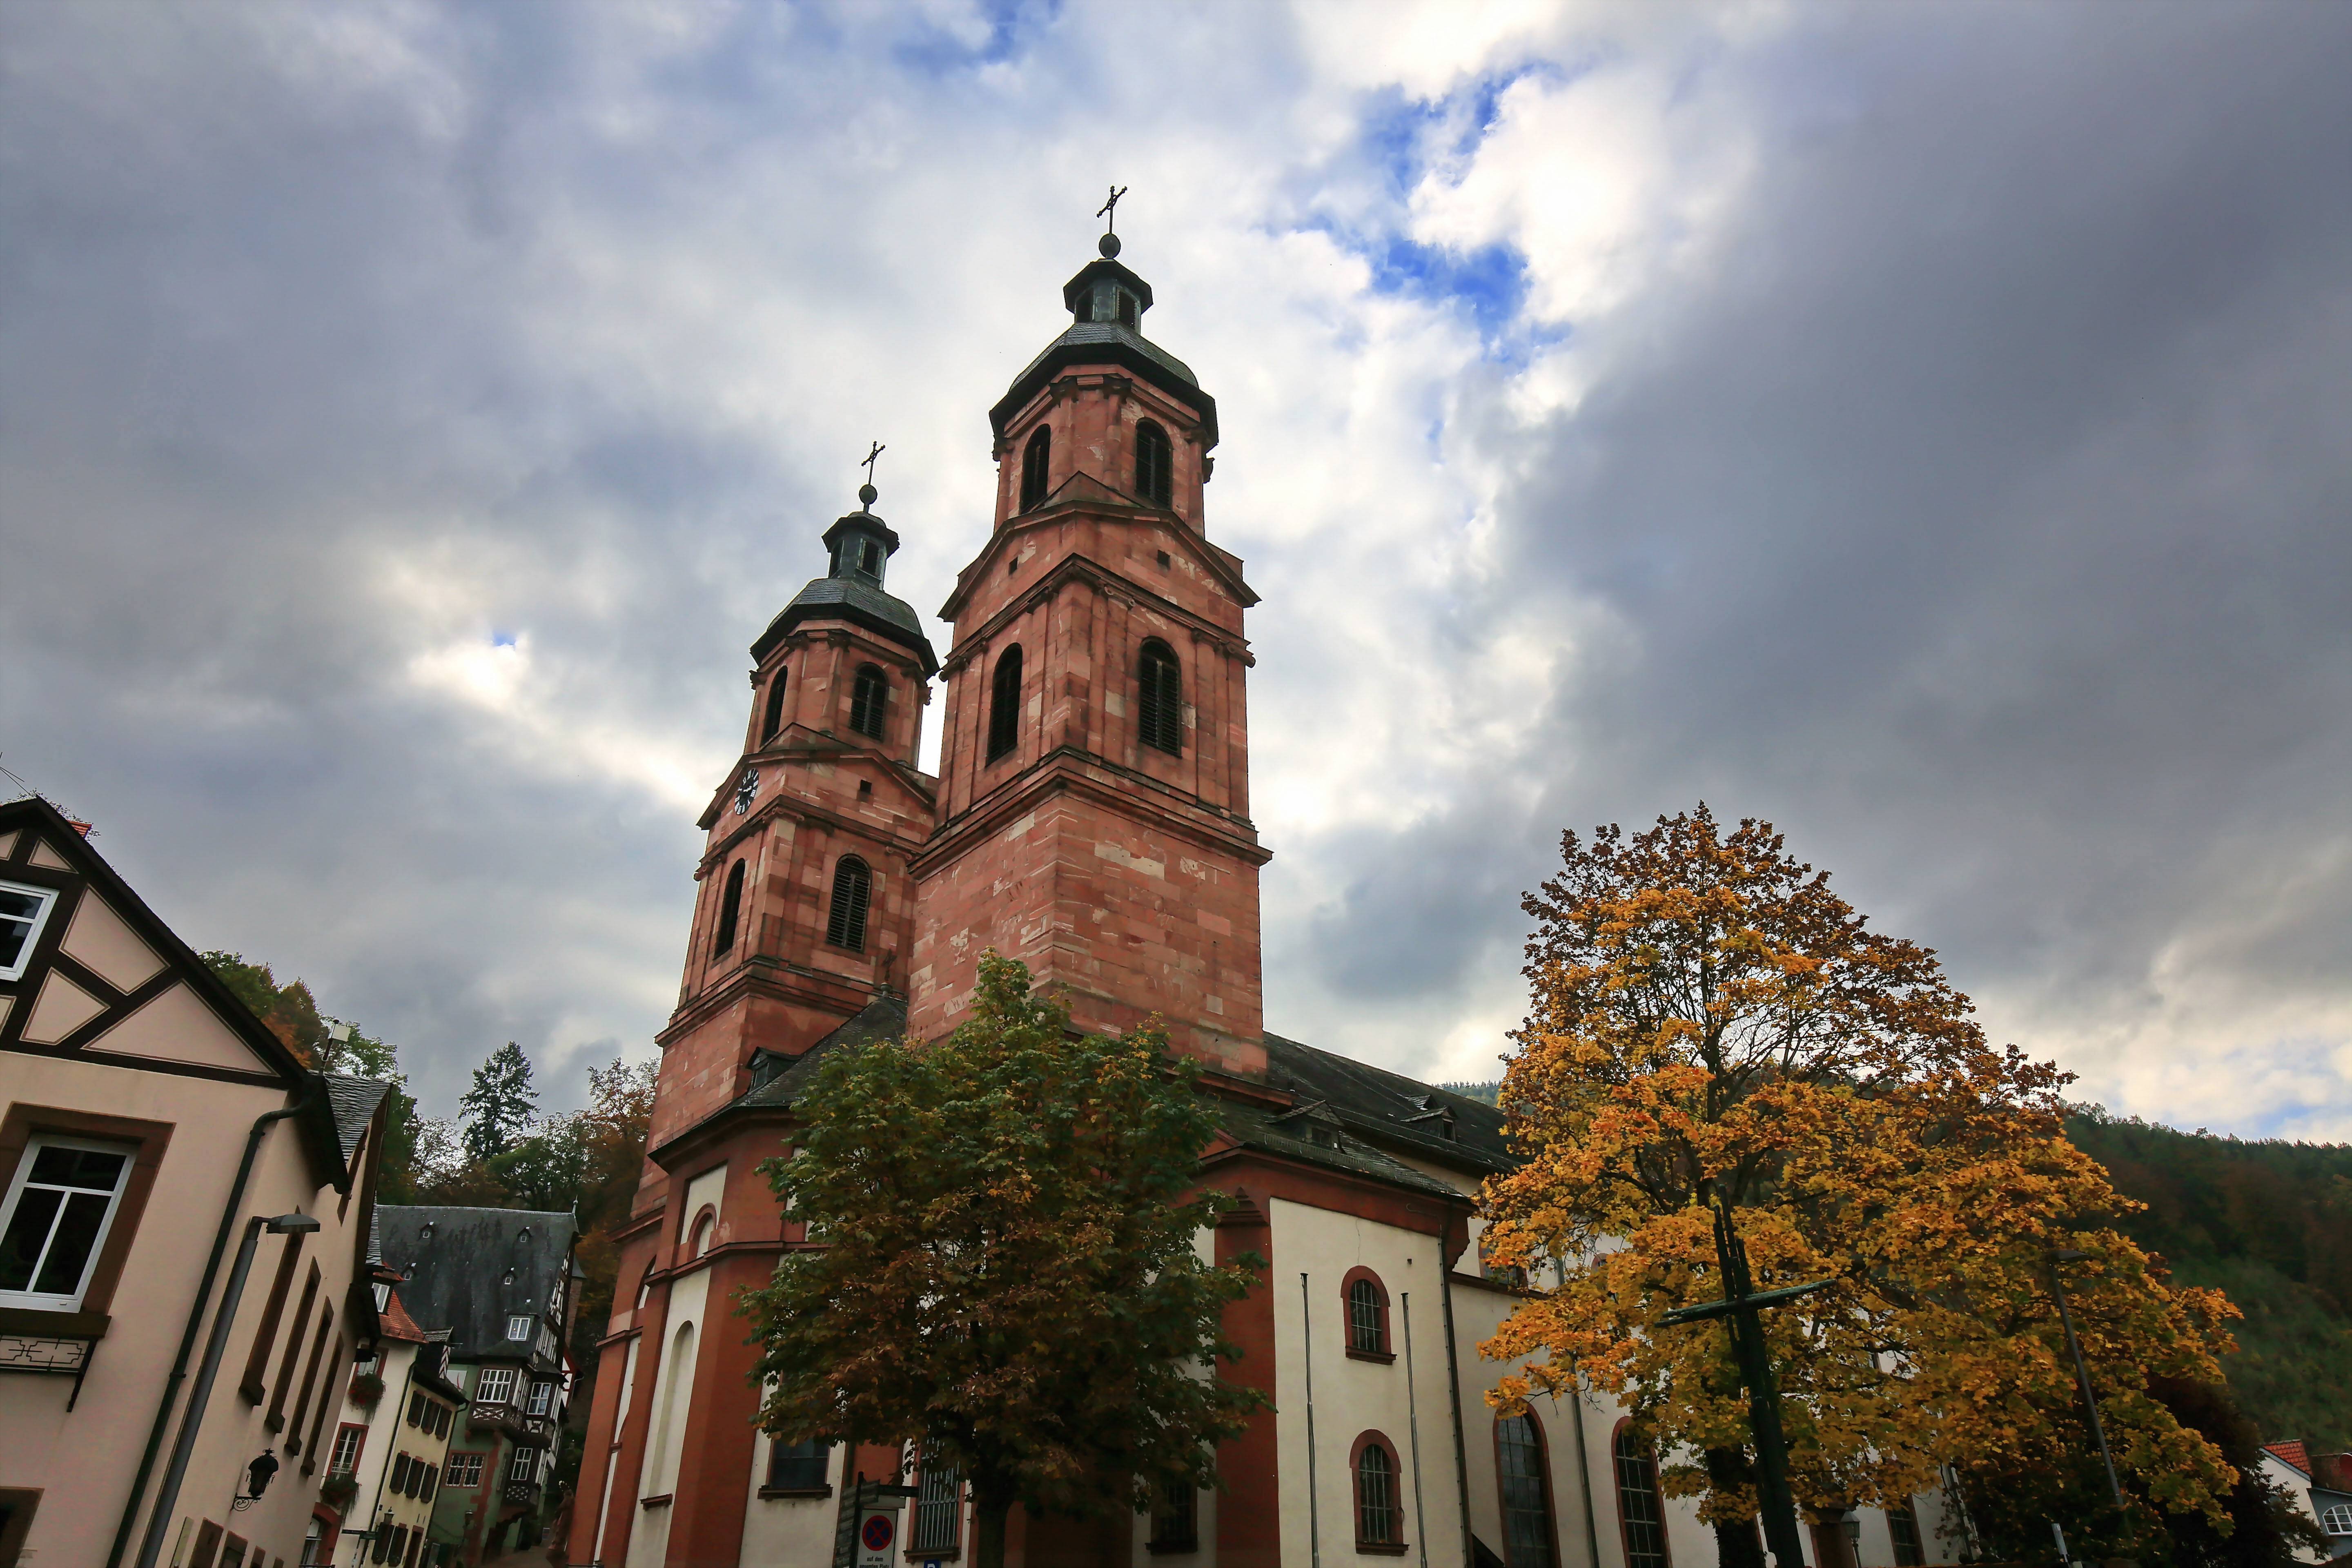 St. Jakobus Kirche, Miltenberg.